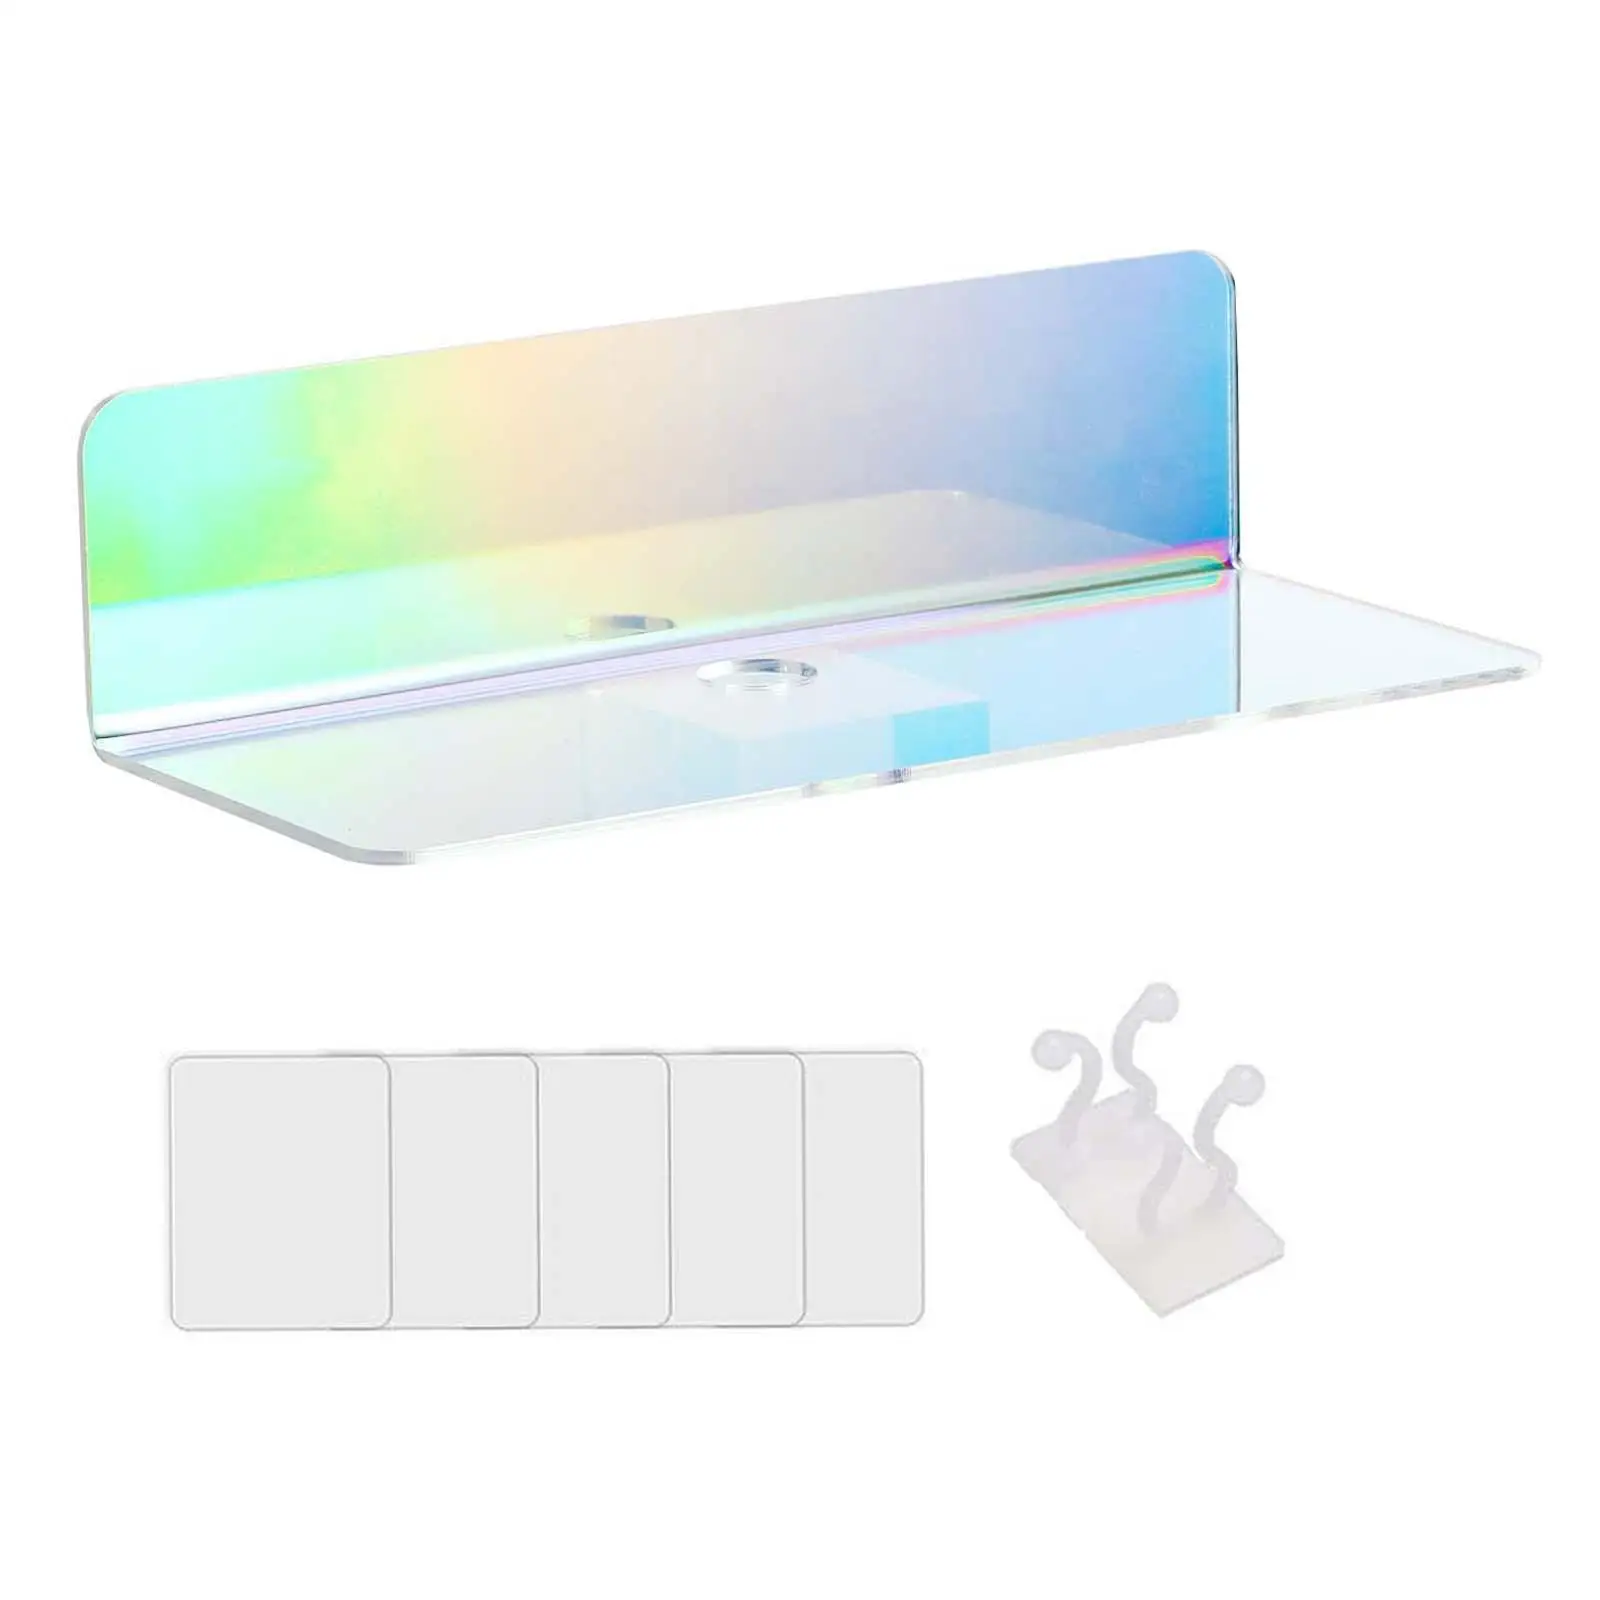 1Pcs Acrylic Clear Floating Shelf Storage Shelves Display Organizer Wall Mount